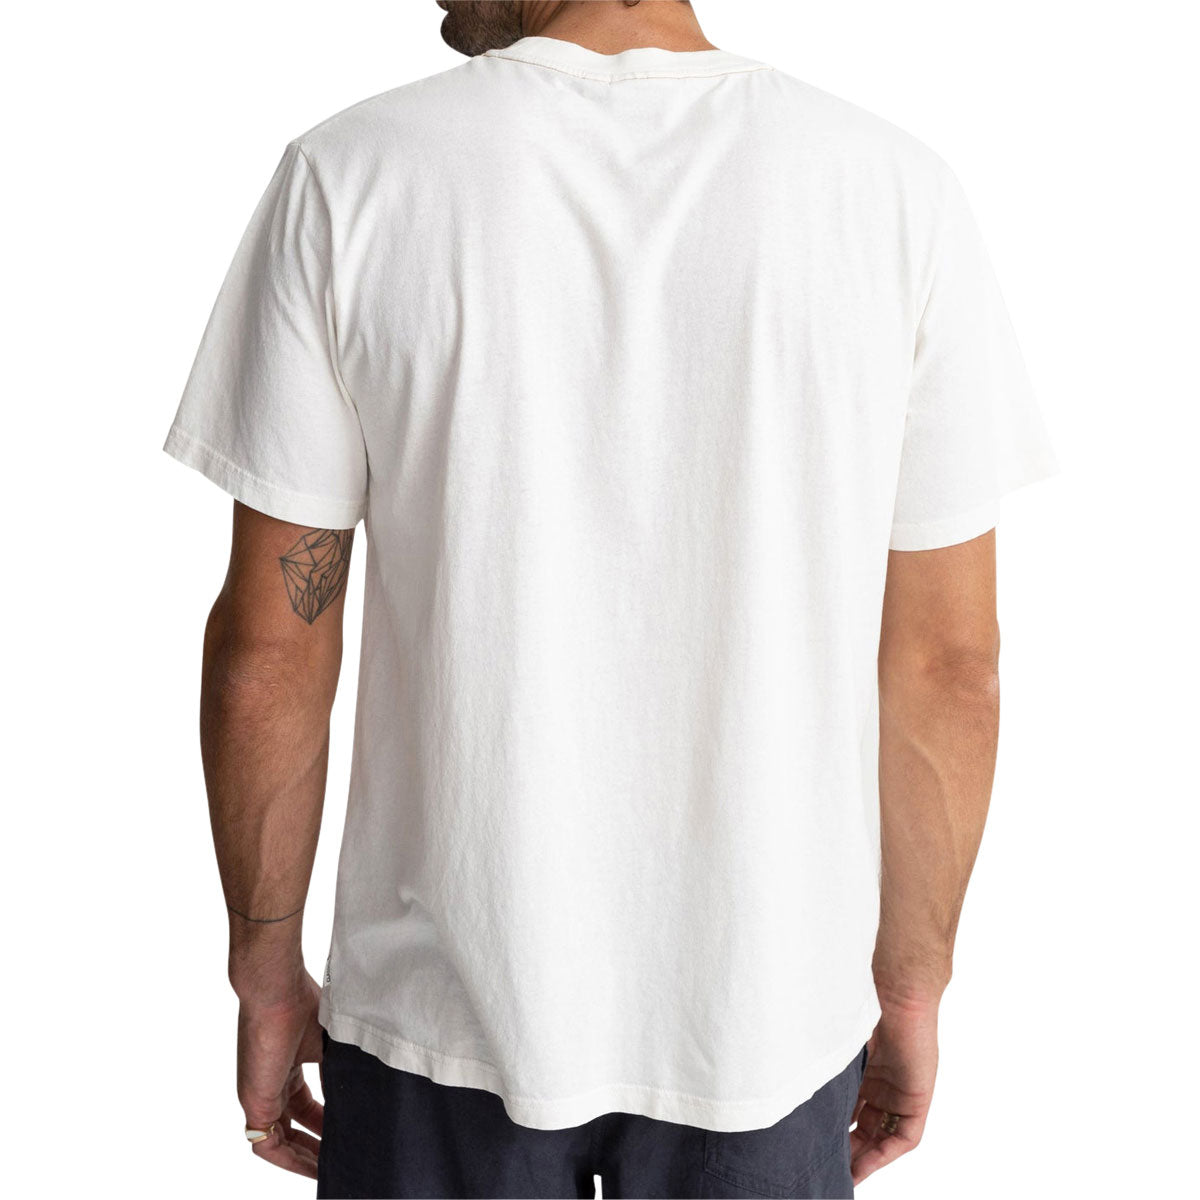 Rhythm Classic Brand T-Shirt - Vintage White image 3